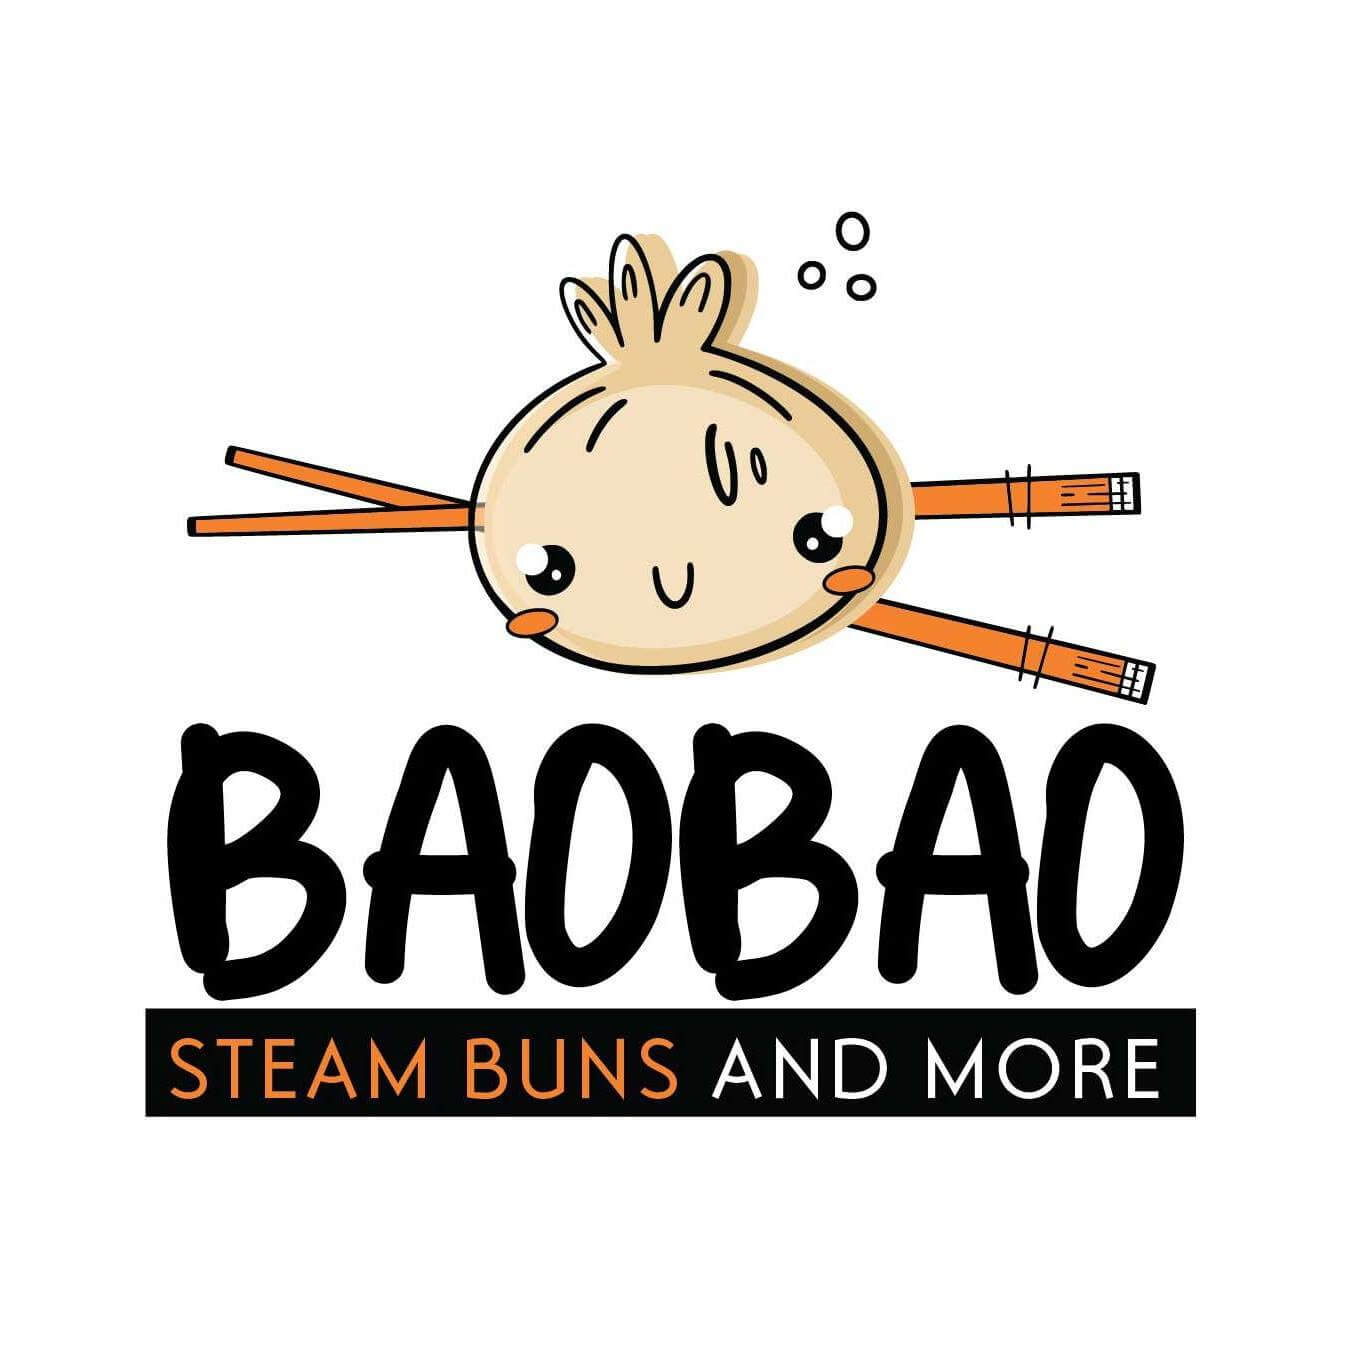 Bao bao steam buns & more - εικόνα 2